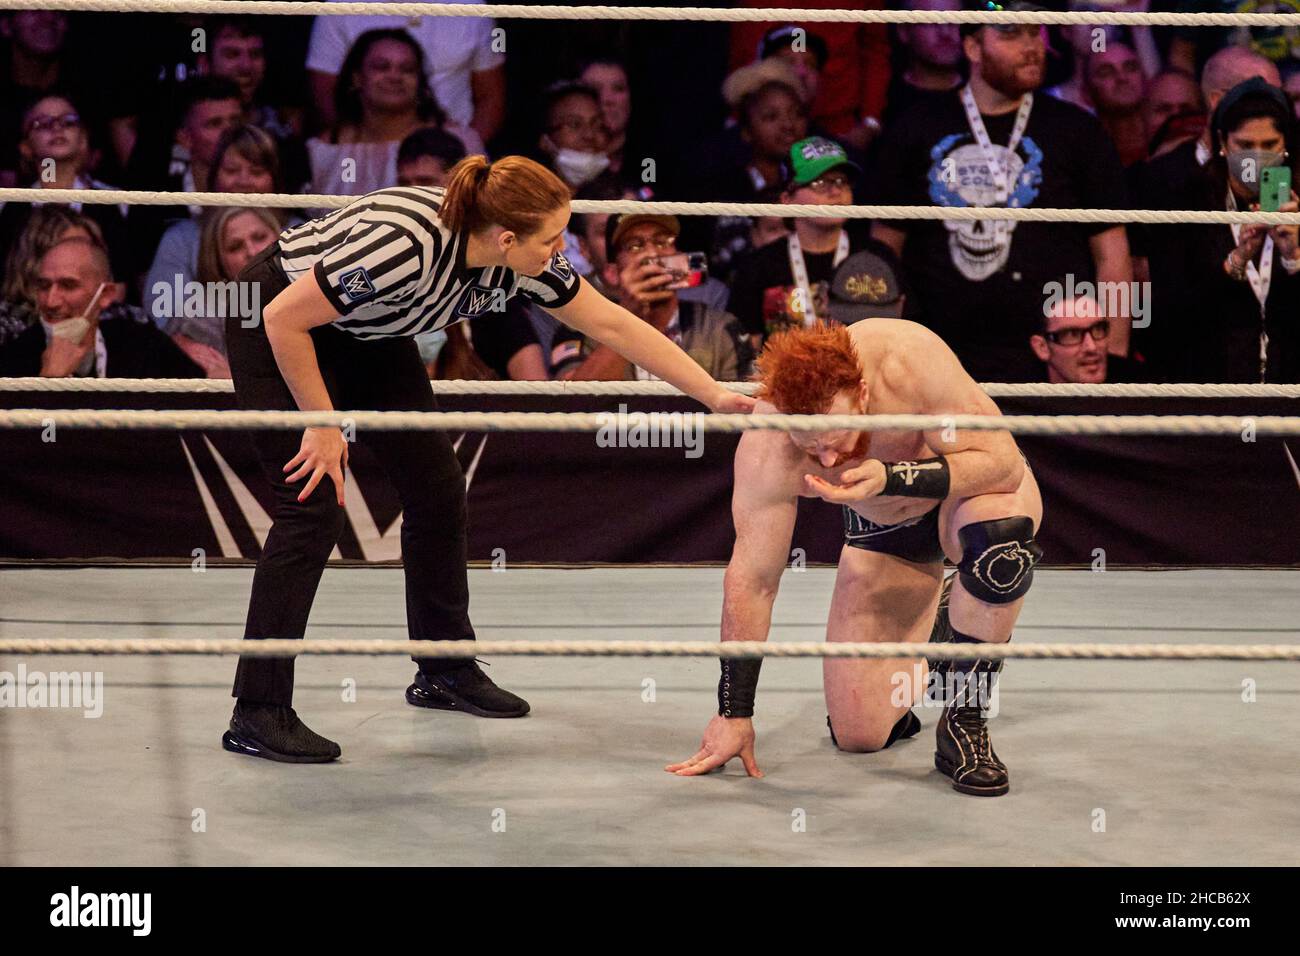 Tampa, Florida, USA. 26th Dec. 2021. Drew Mcintyre vs Sheamus during WWE fight at Amalie Arena. Credit: Yaroslav Sabitov/YES Market Media/Alamy Live News Stock Photo